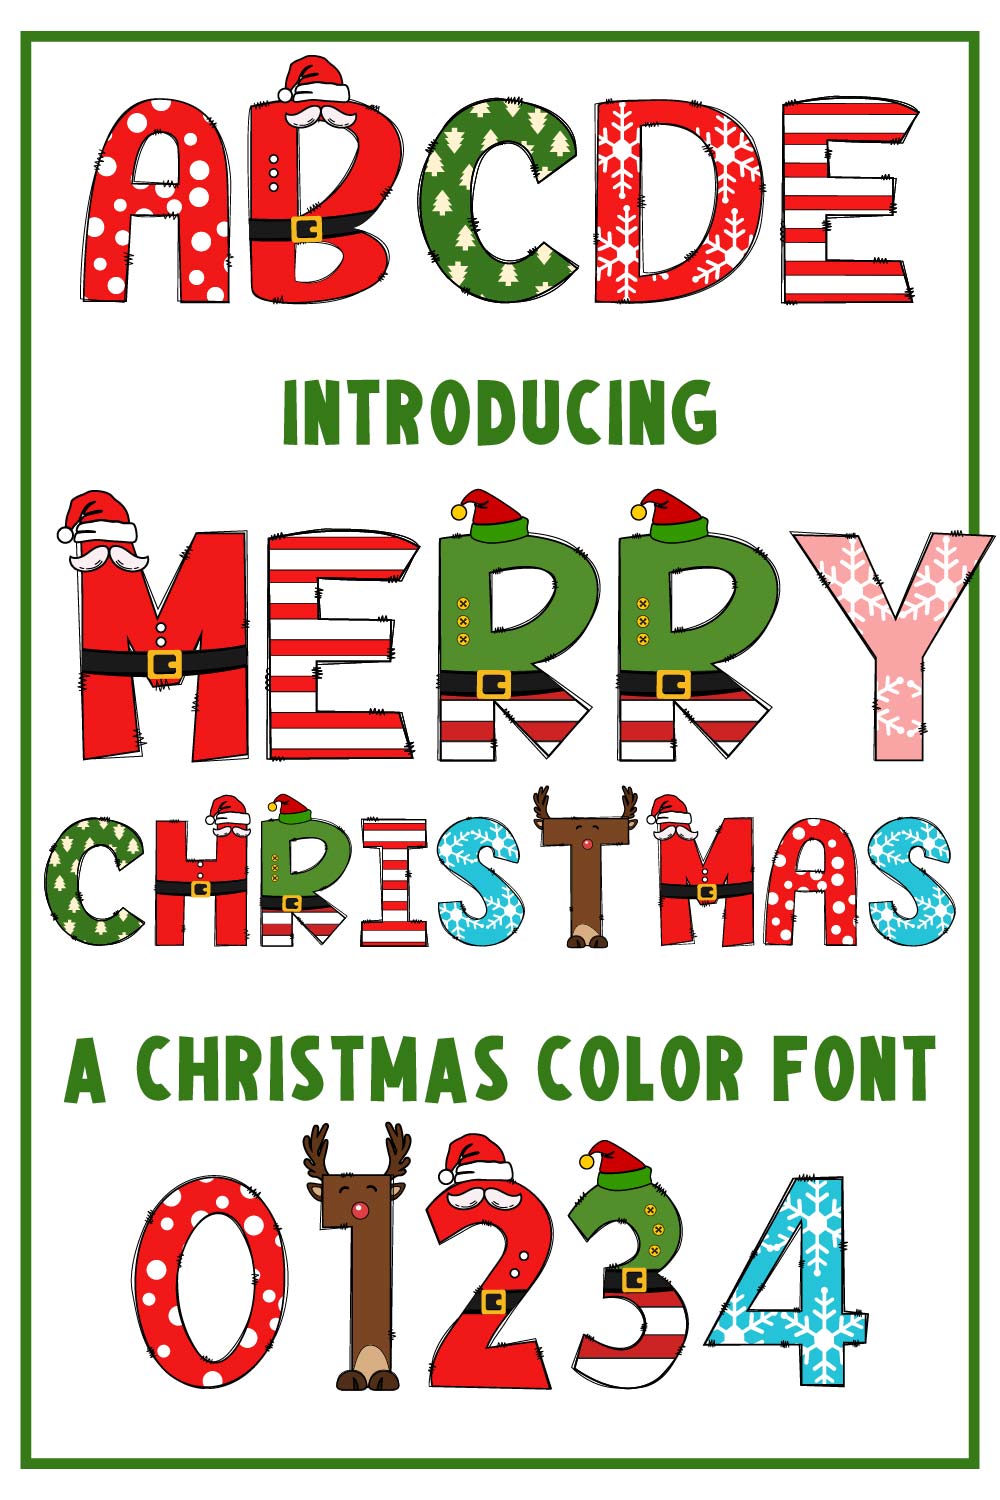 Merry Christmas Color Font Design pinterest image.